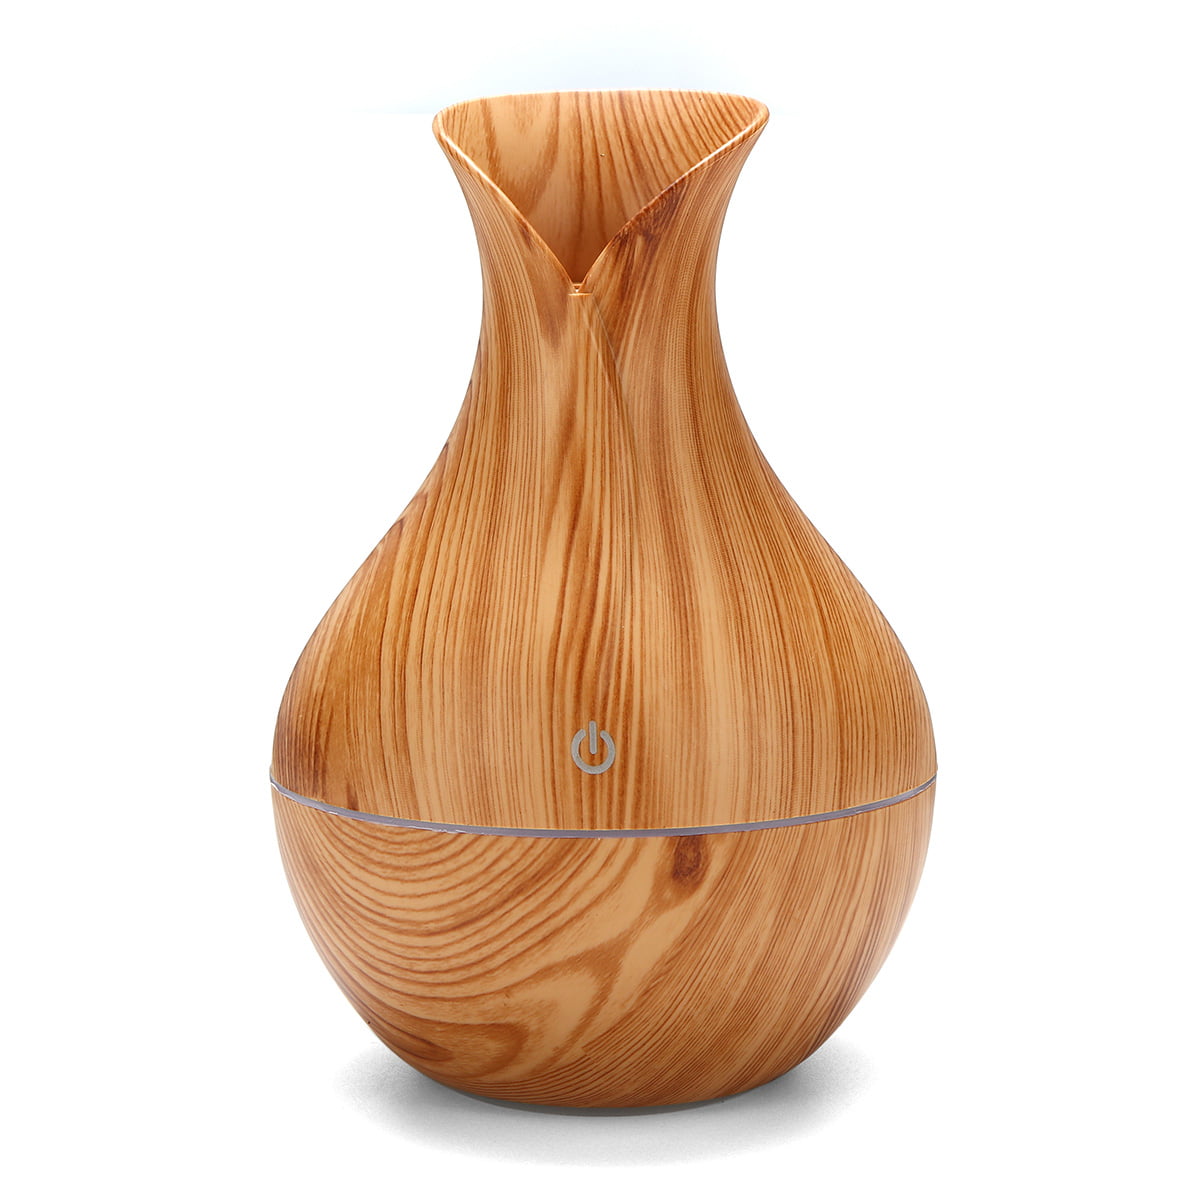 Wood Grain Aroma Diffuser, Ultrasonic Fragrance Vaporizer Humidifier